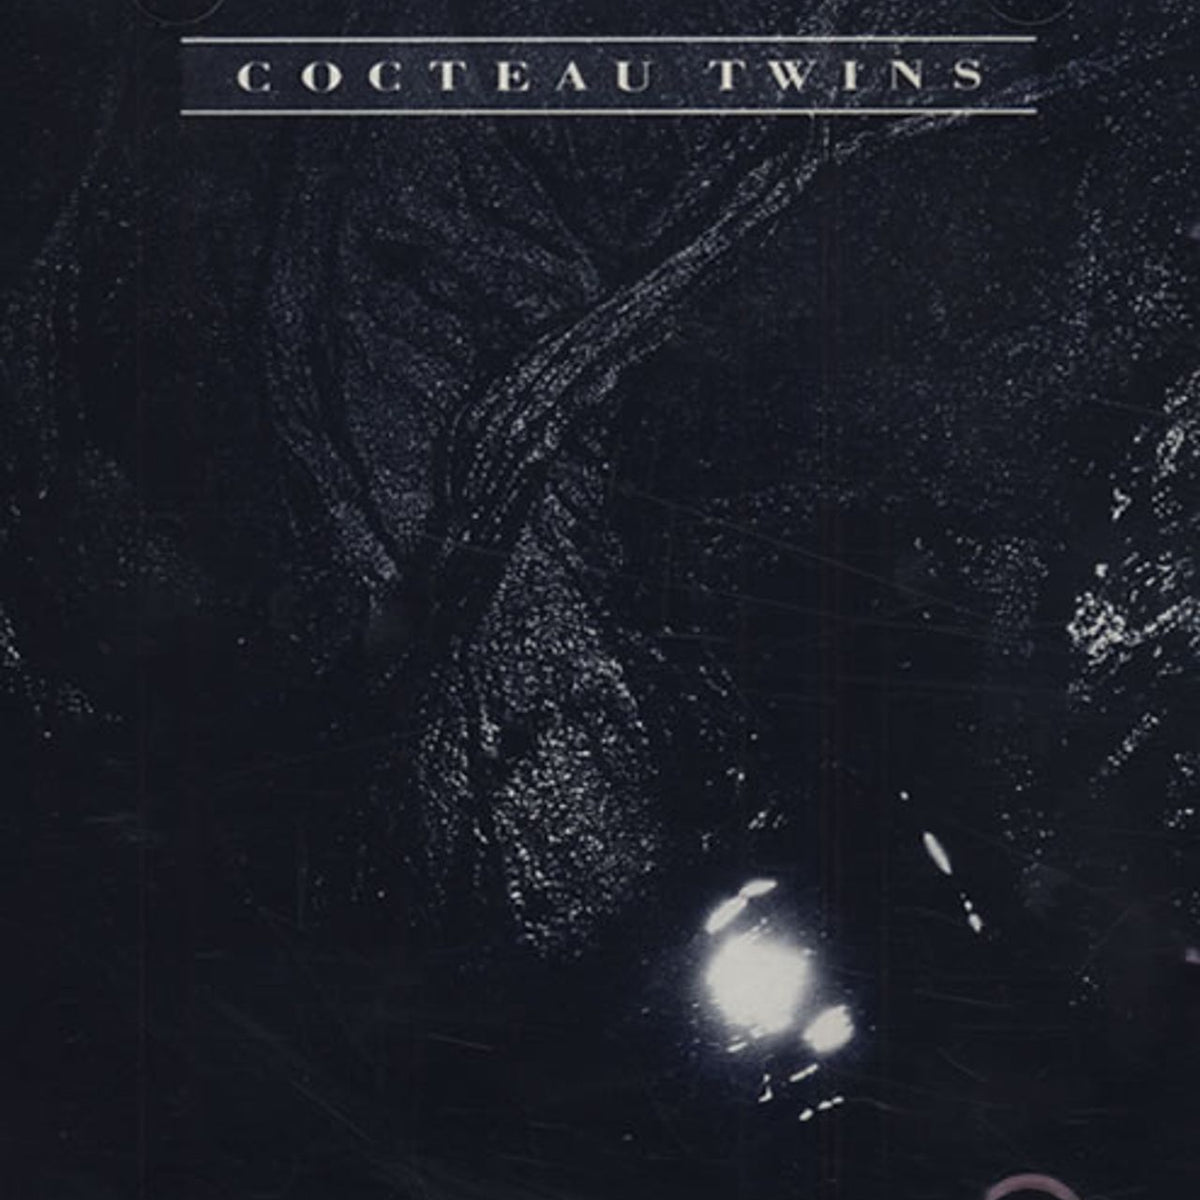 Cocteau Twins The Pink Opaque US CD album — RareVinyl.com